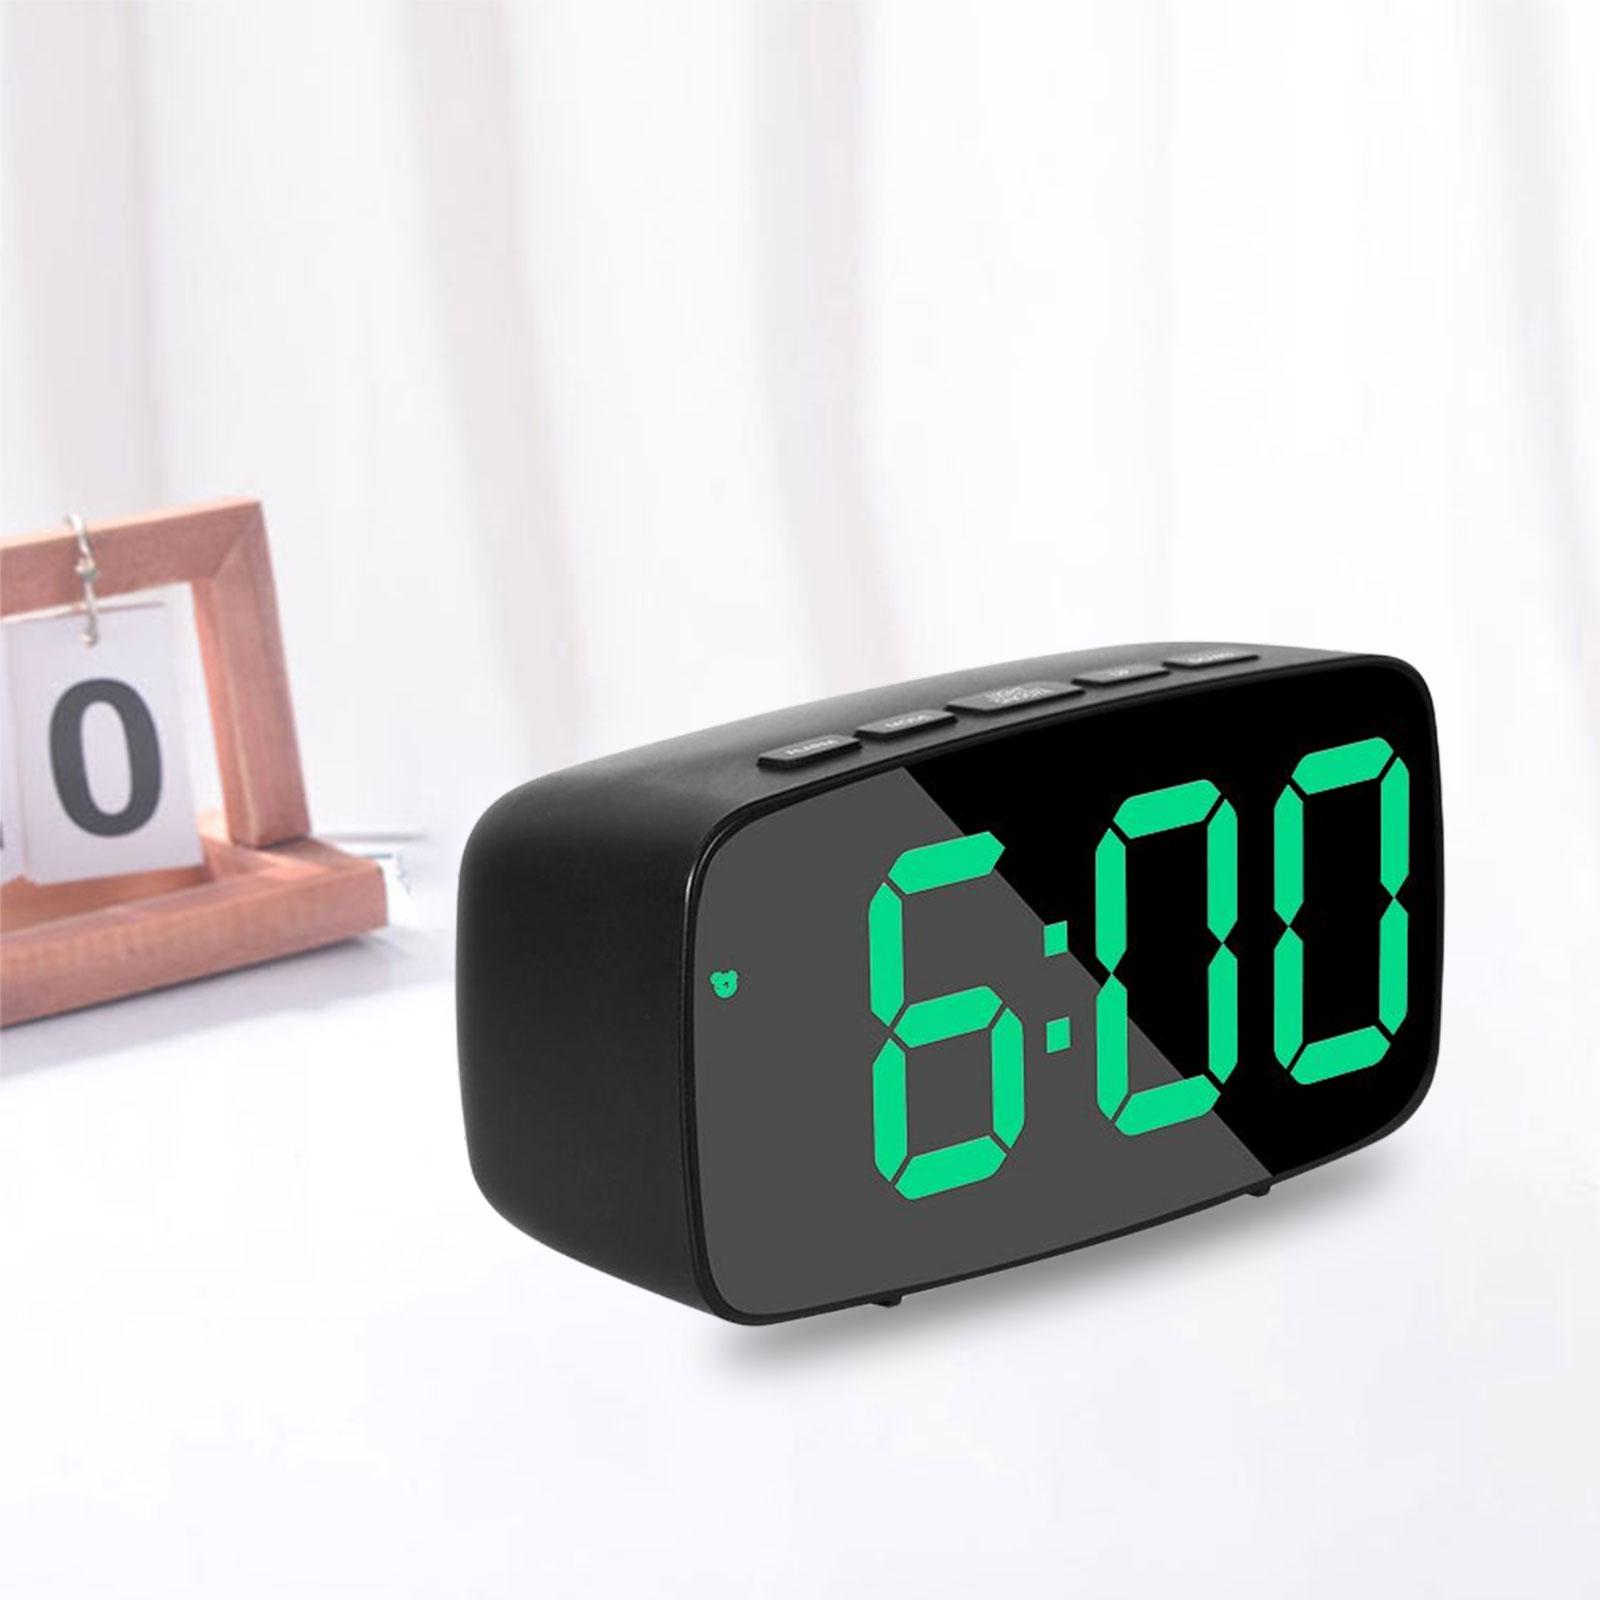 Digital LED Alarm Clock Bedroom Mirror Surface Snooze Bedside Green Light